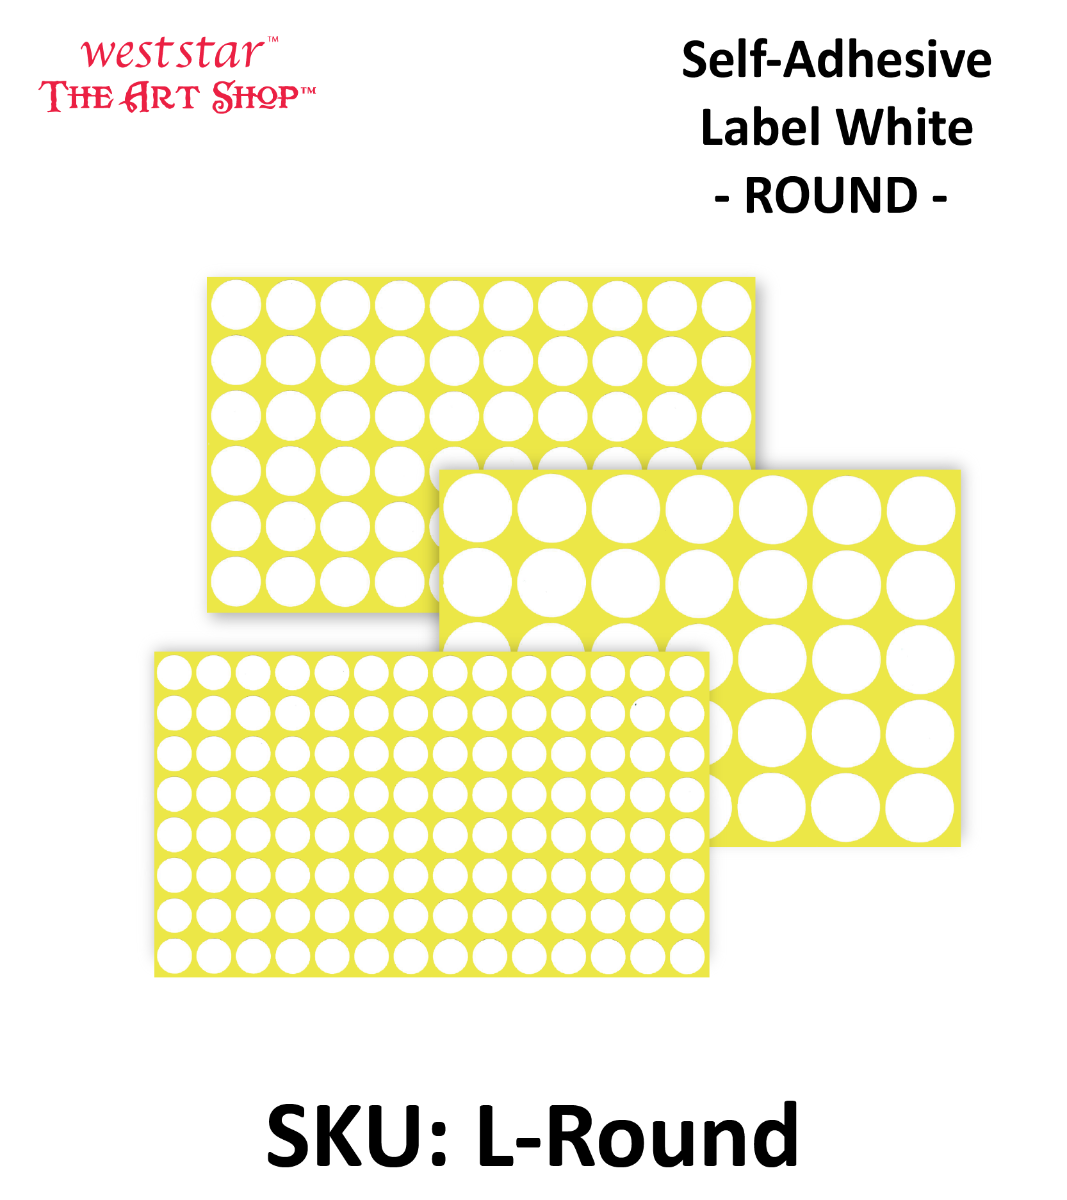 Self-Adhesive Label White Color - Round